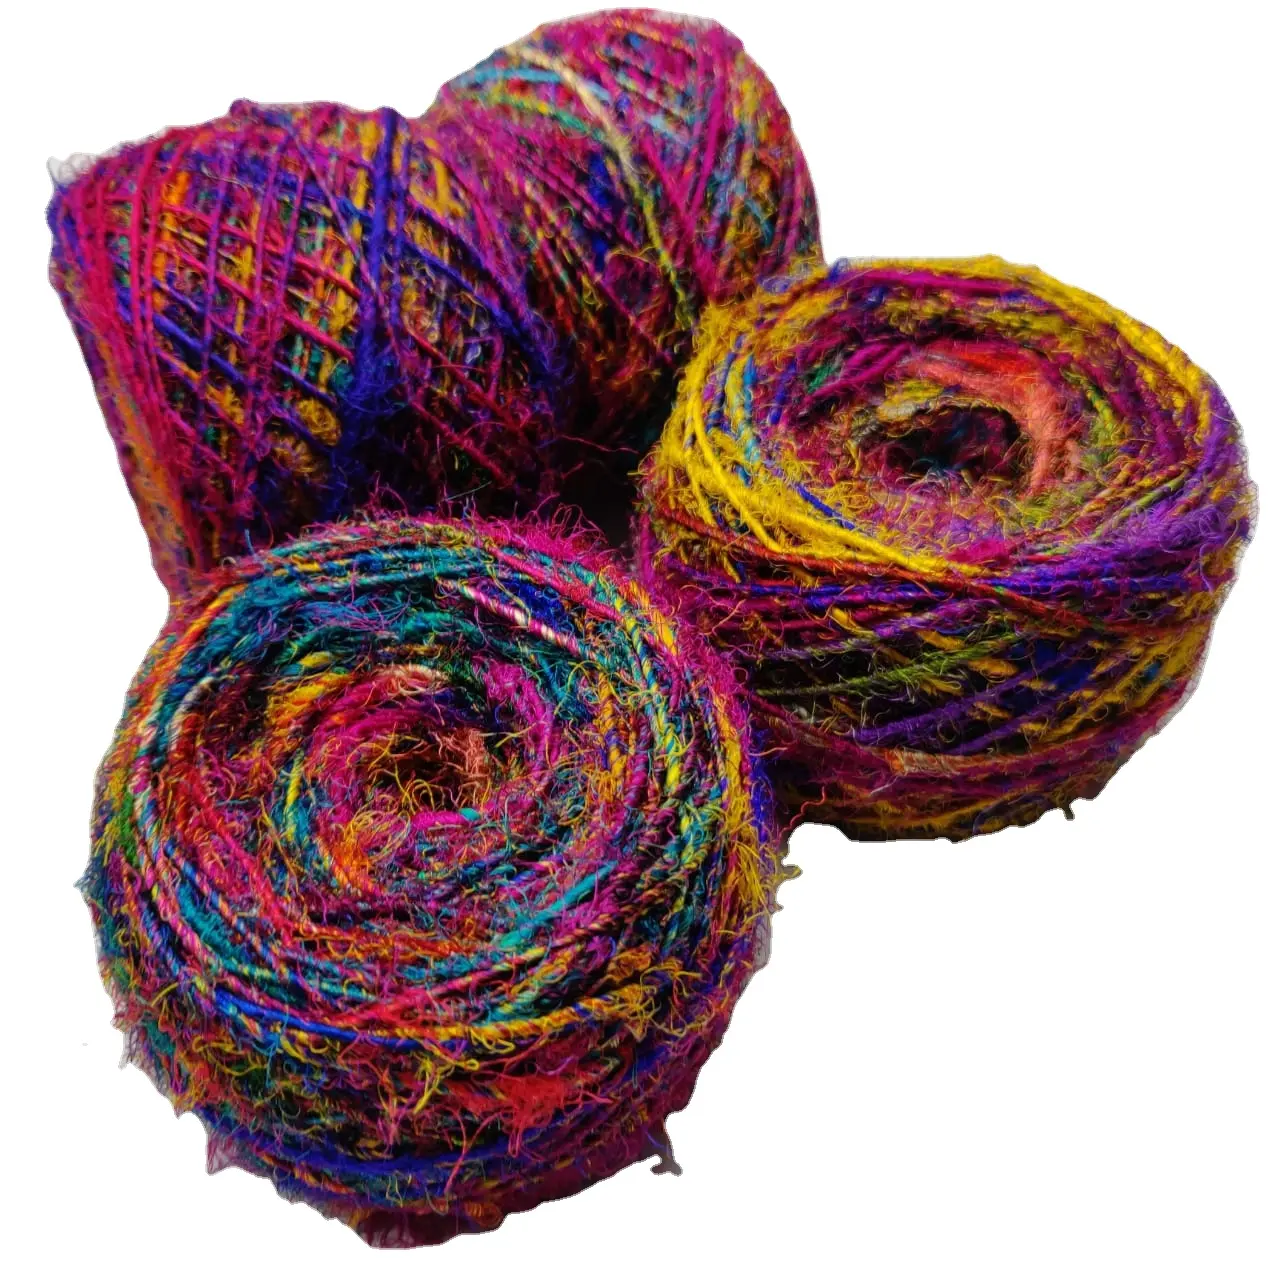 himalaya silk yarn Cone Dyed Yarn Mulberry Yarn Weaving Natural Pure Mulberry Raw Silk Spun Silk Factory Price Ring Embroidery